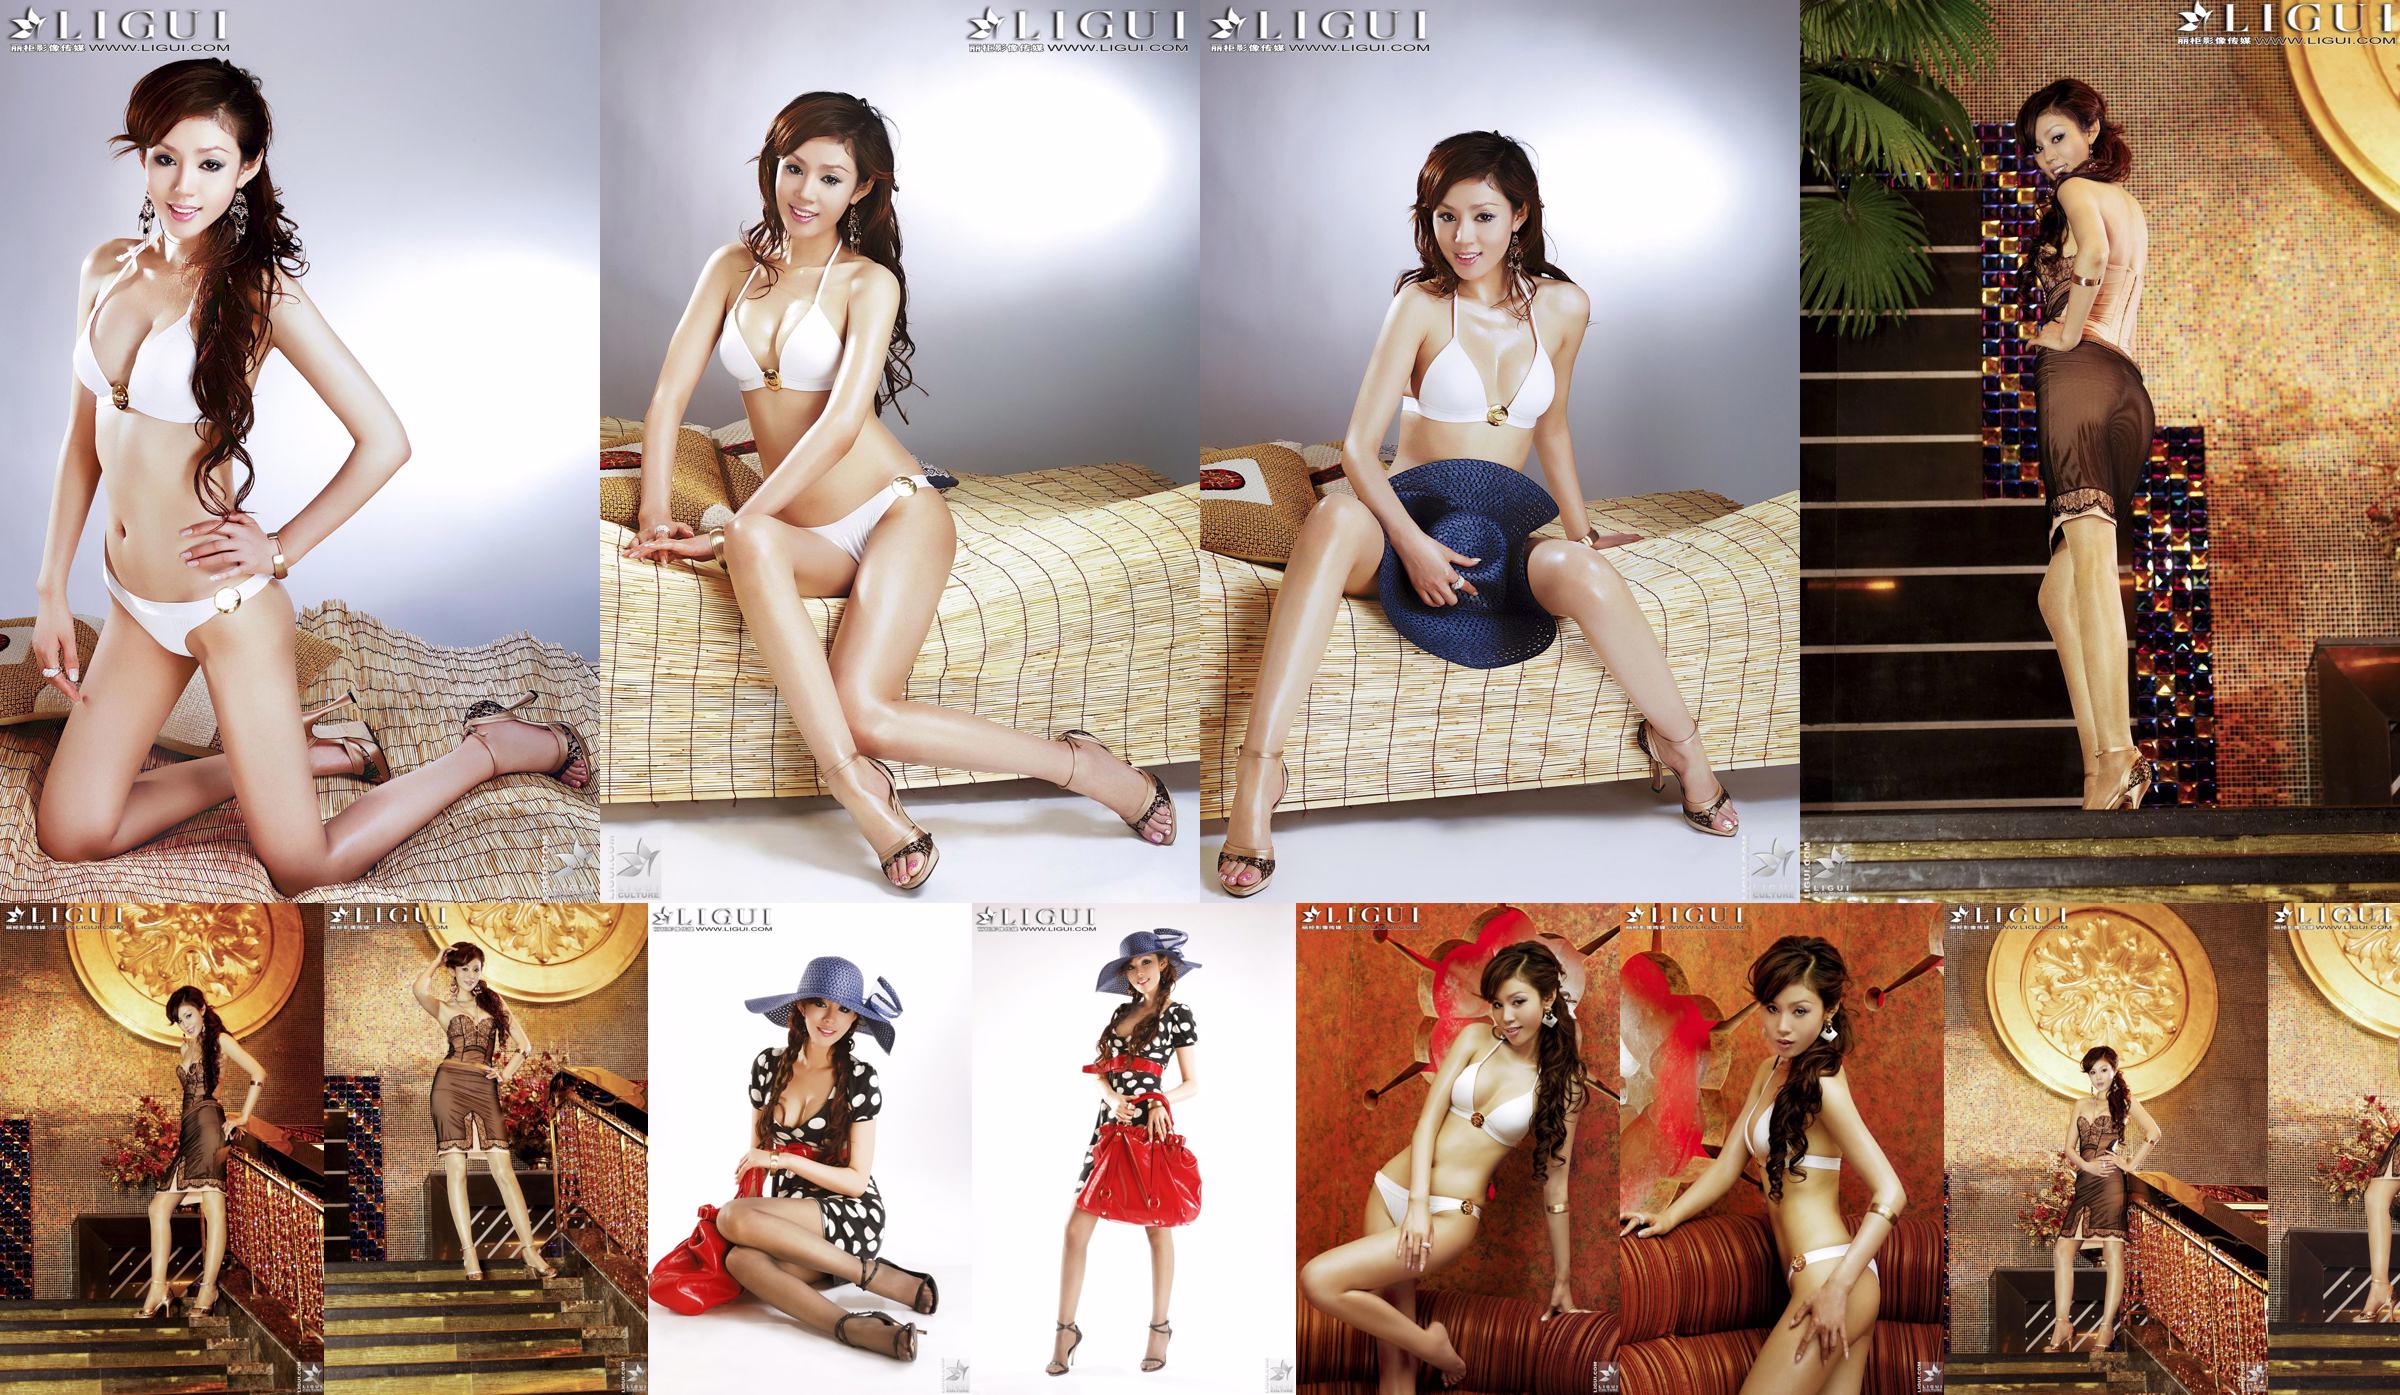 [丽 柜 LiGui] Foto de "Bikini + Vestido" de la modelo Yao Jinjin con hermosas piernas y pies sedosos No.18de01 Página 25